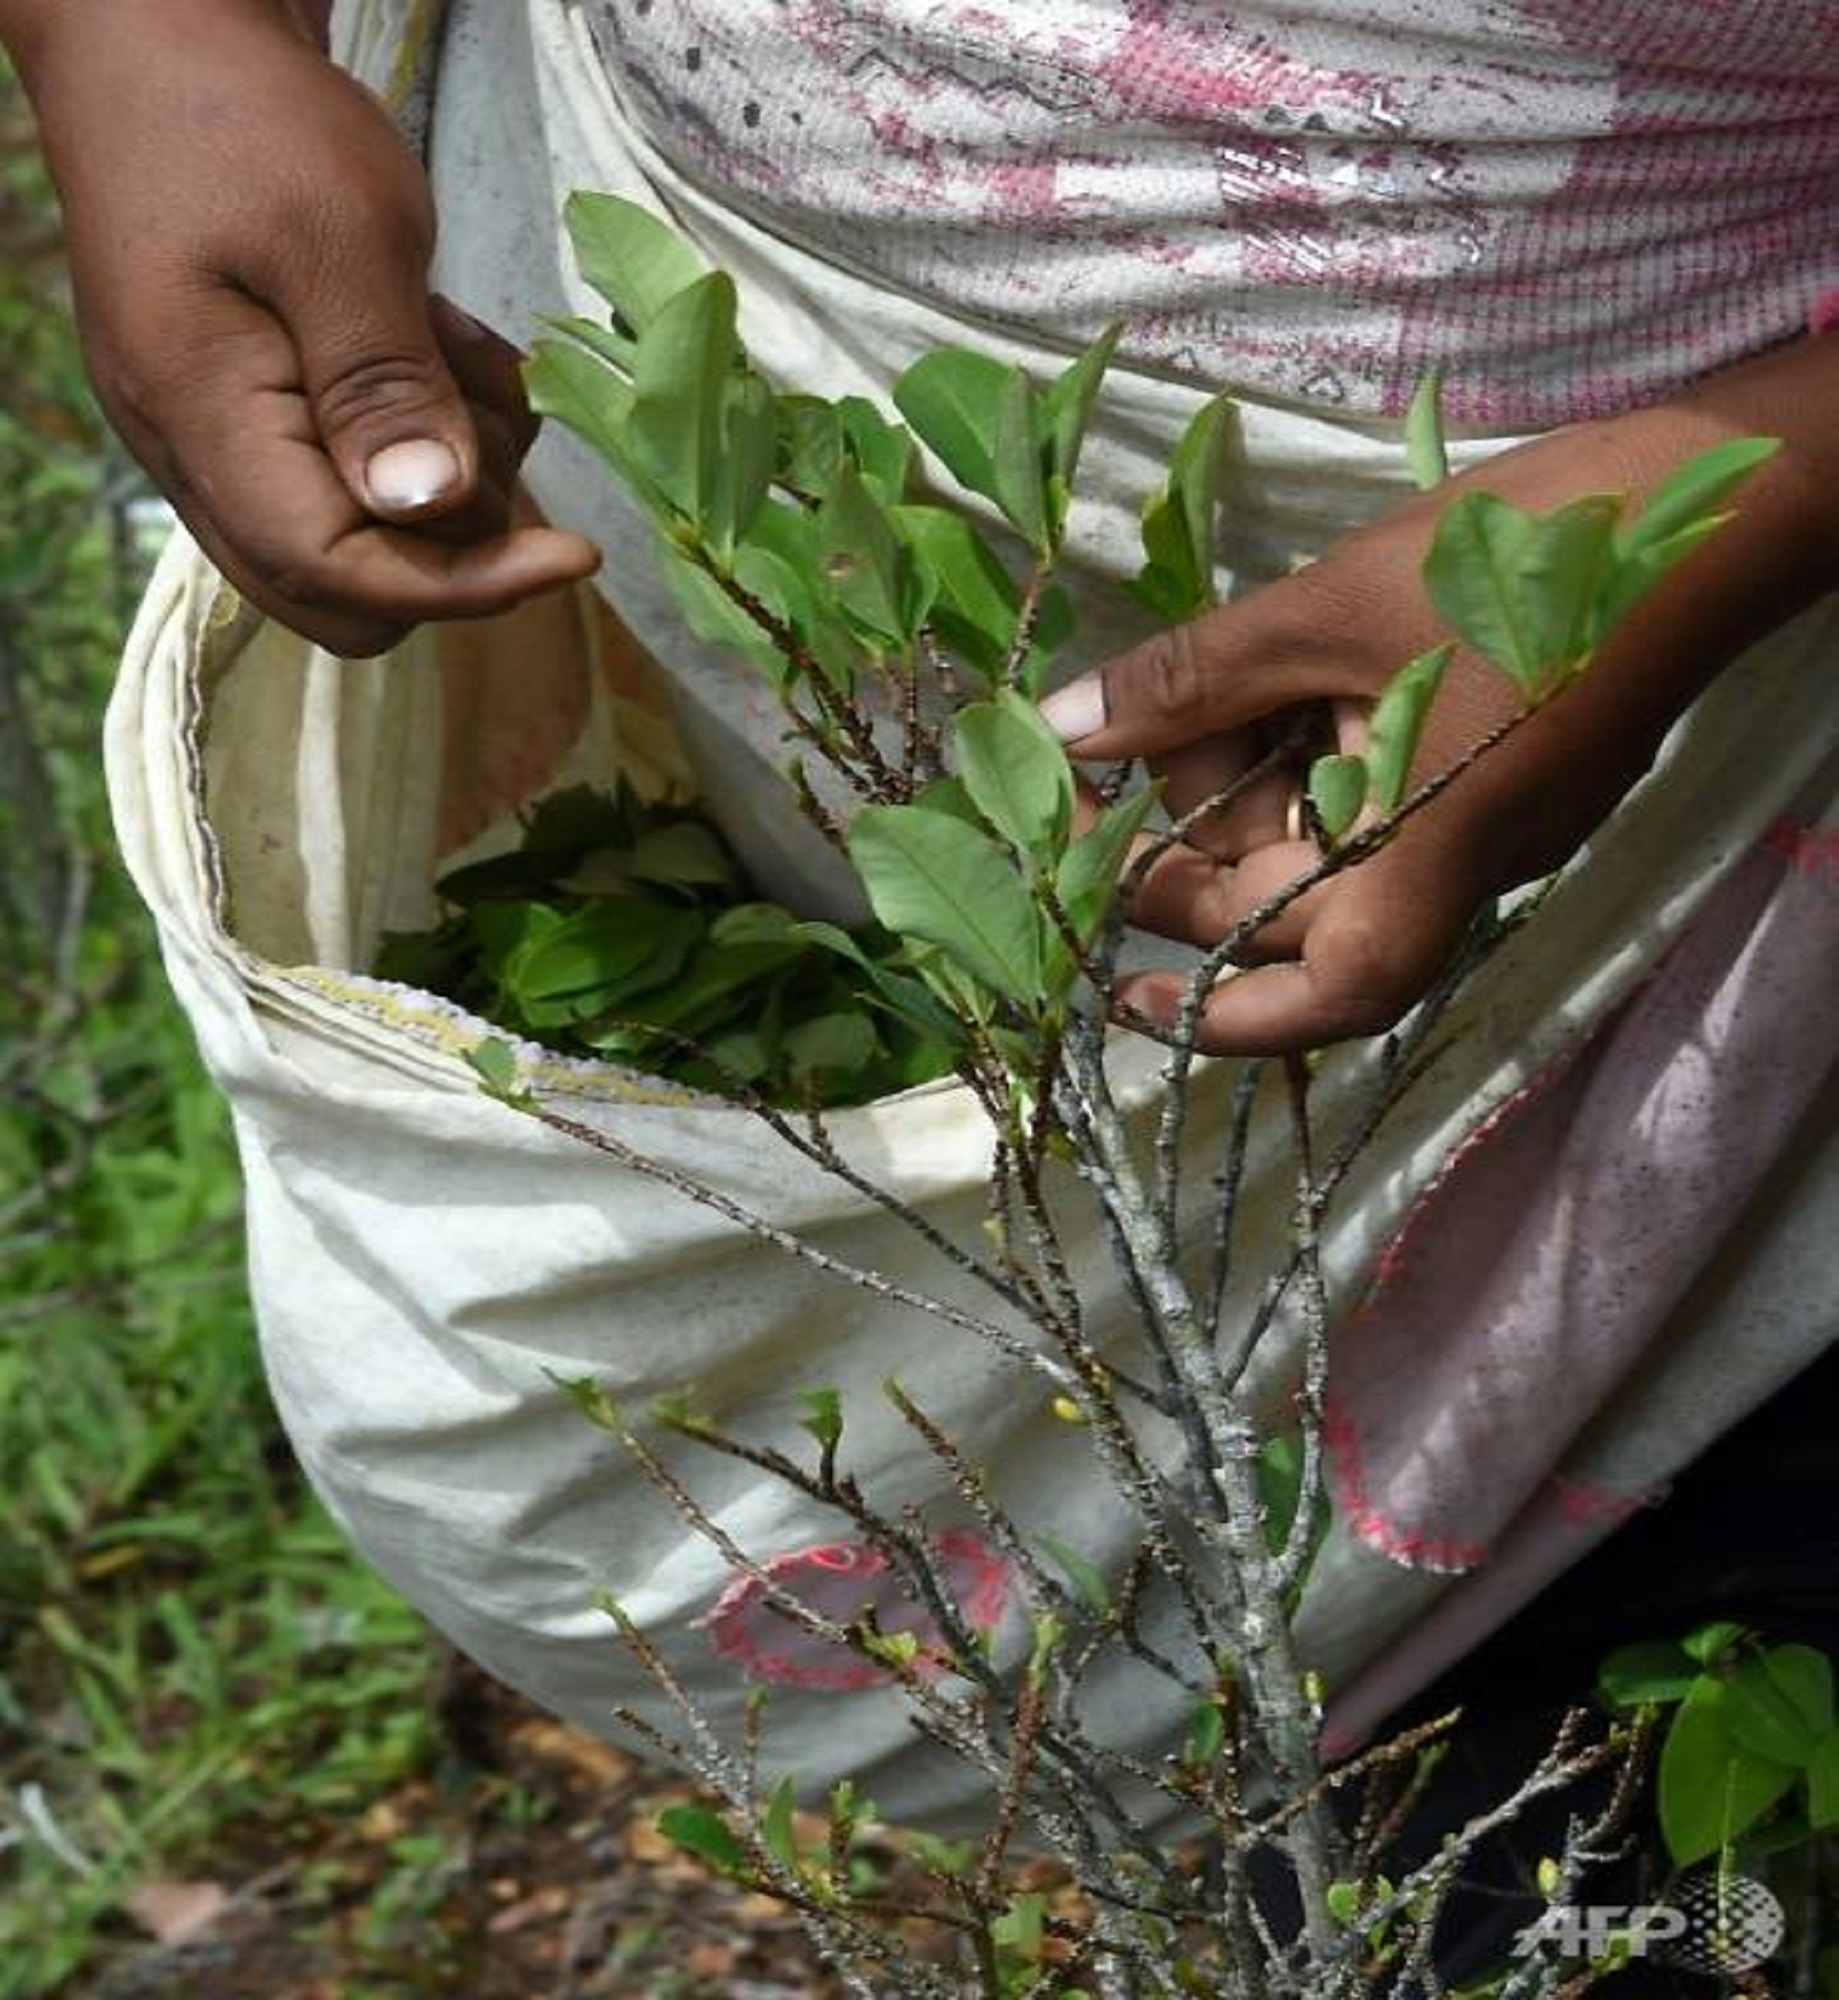 ‘There’ll be war’ if Bolivia cuts coca growing, farmers warn